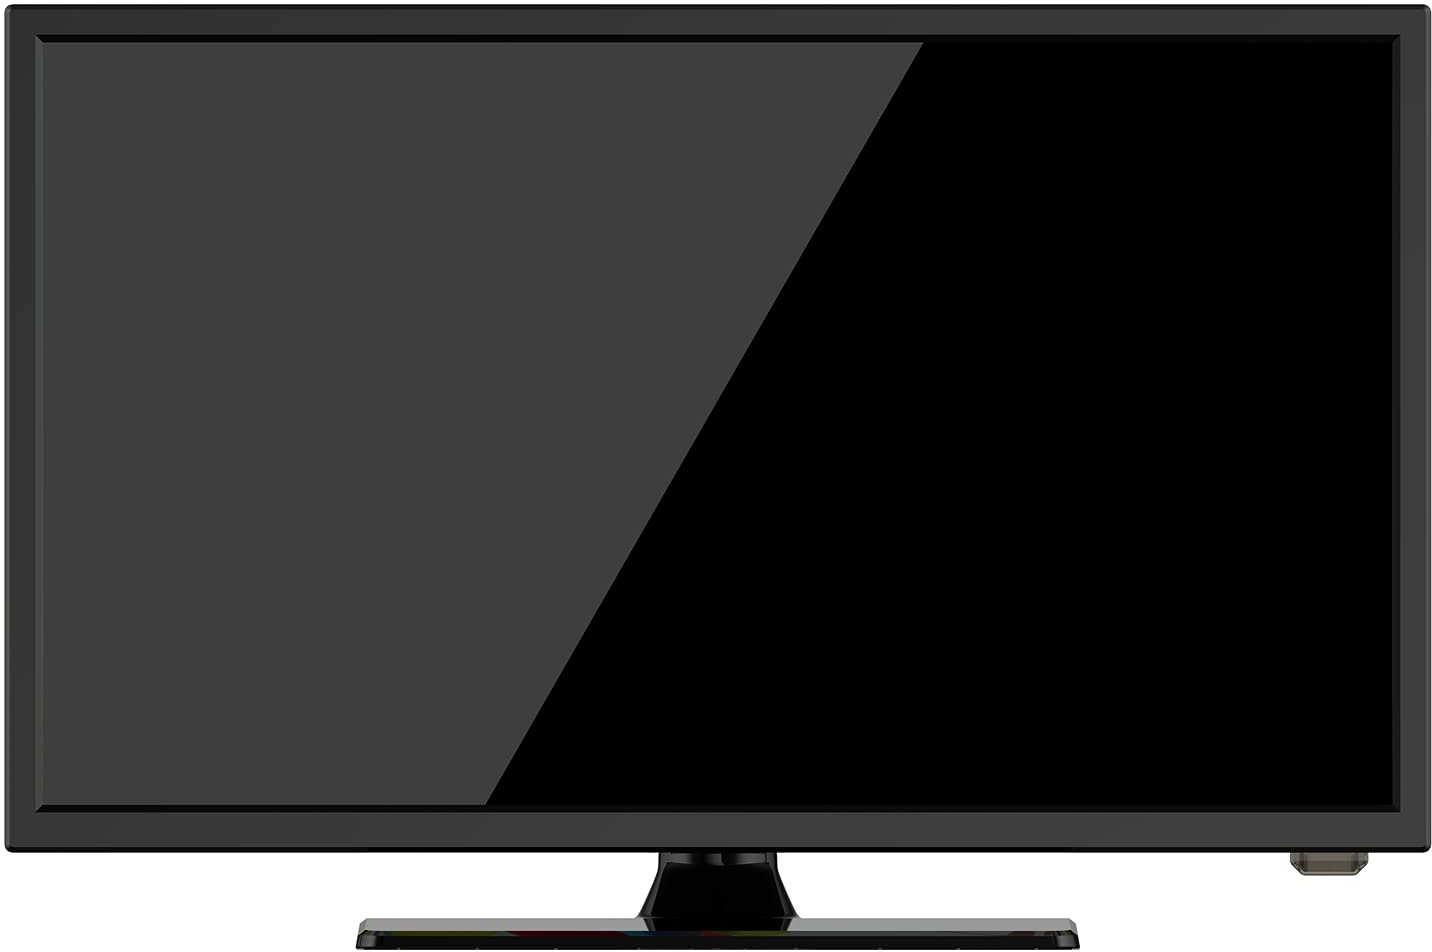 Reflexion 24 Zoll Smart Wide-Screen Full HD LED-Fernseher für Wohnmobile mit DVB-T2 HD, DVD-Player, Bluetooth, Triple-Tuner und 12 Volt KFZ-Adapter (12 V/24 V, HDMI, USB, DVB-T Antenne), Schwarz